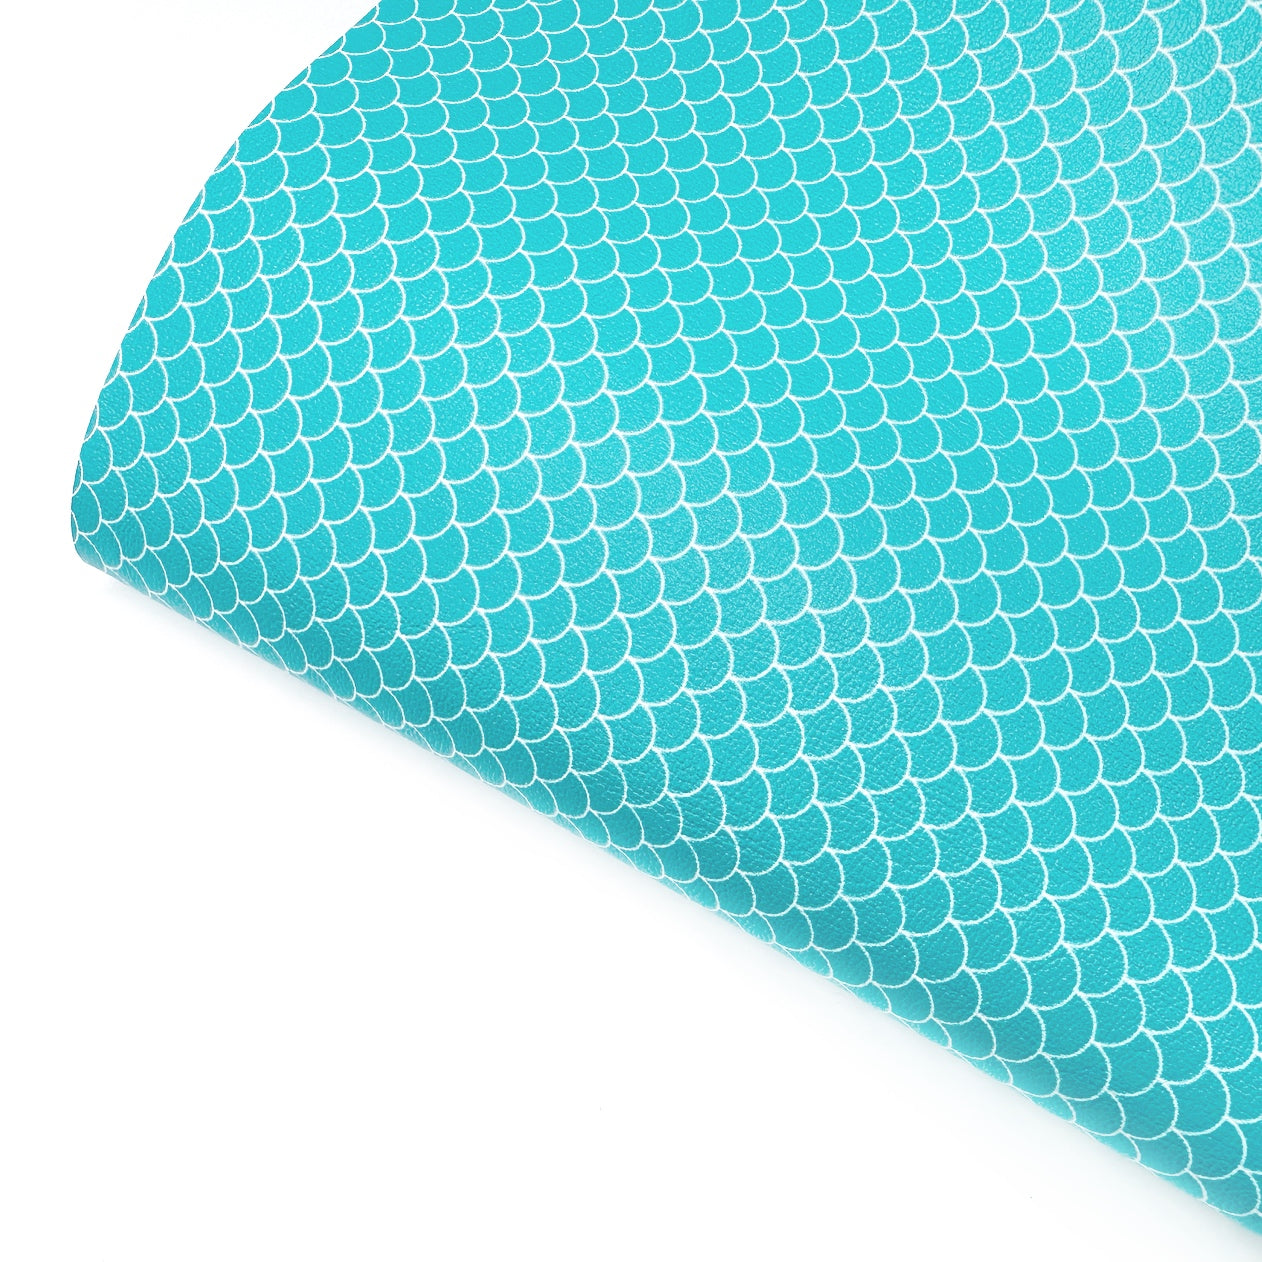 Aqua Mermaid Scales Premium Faux Leather Fabric Sheets